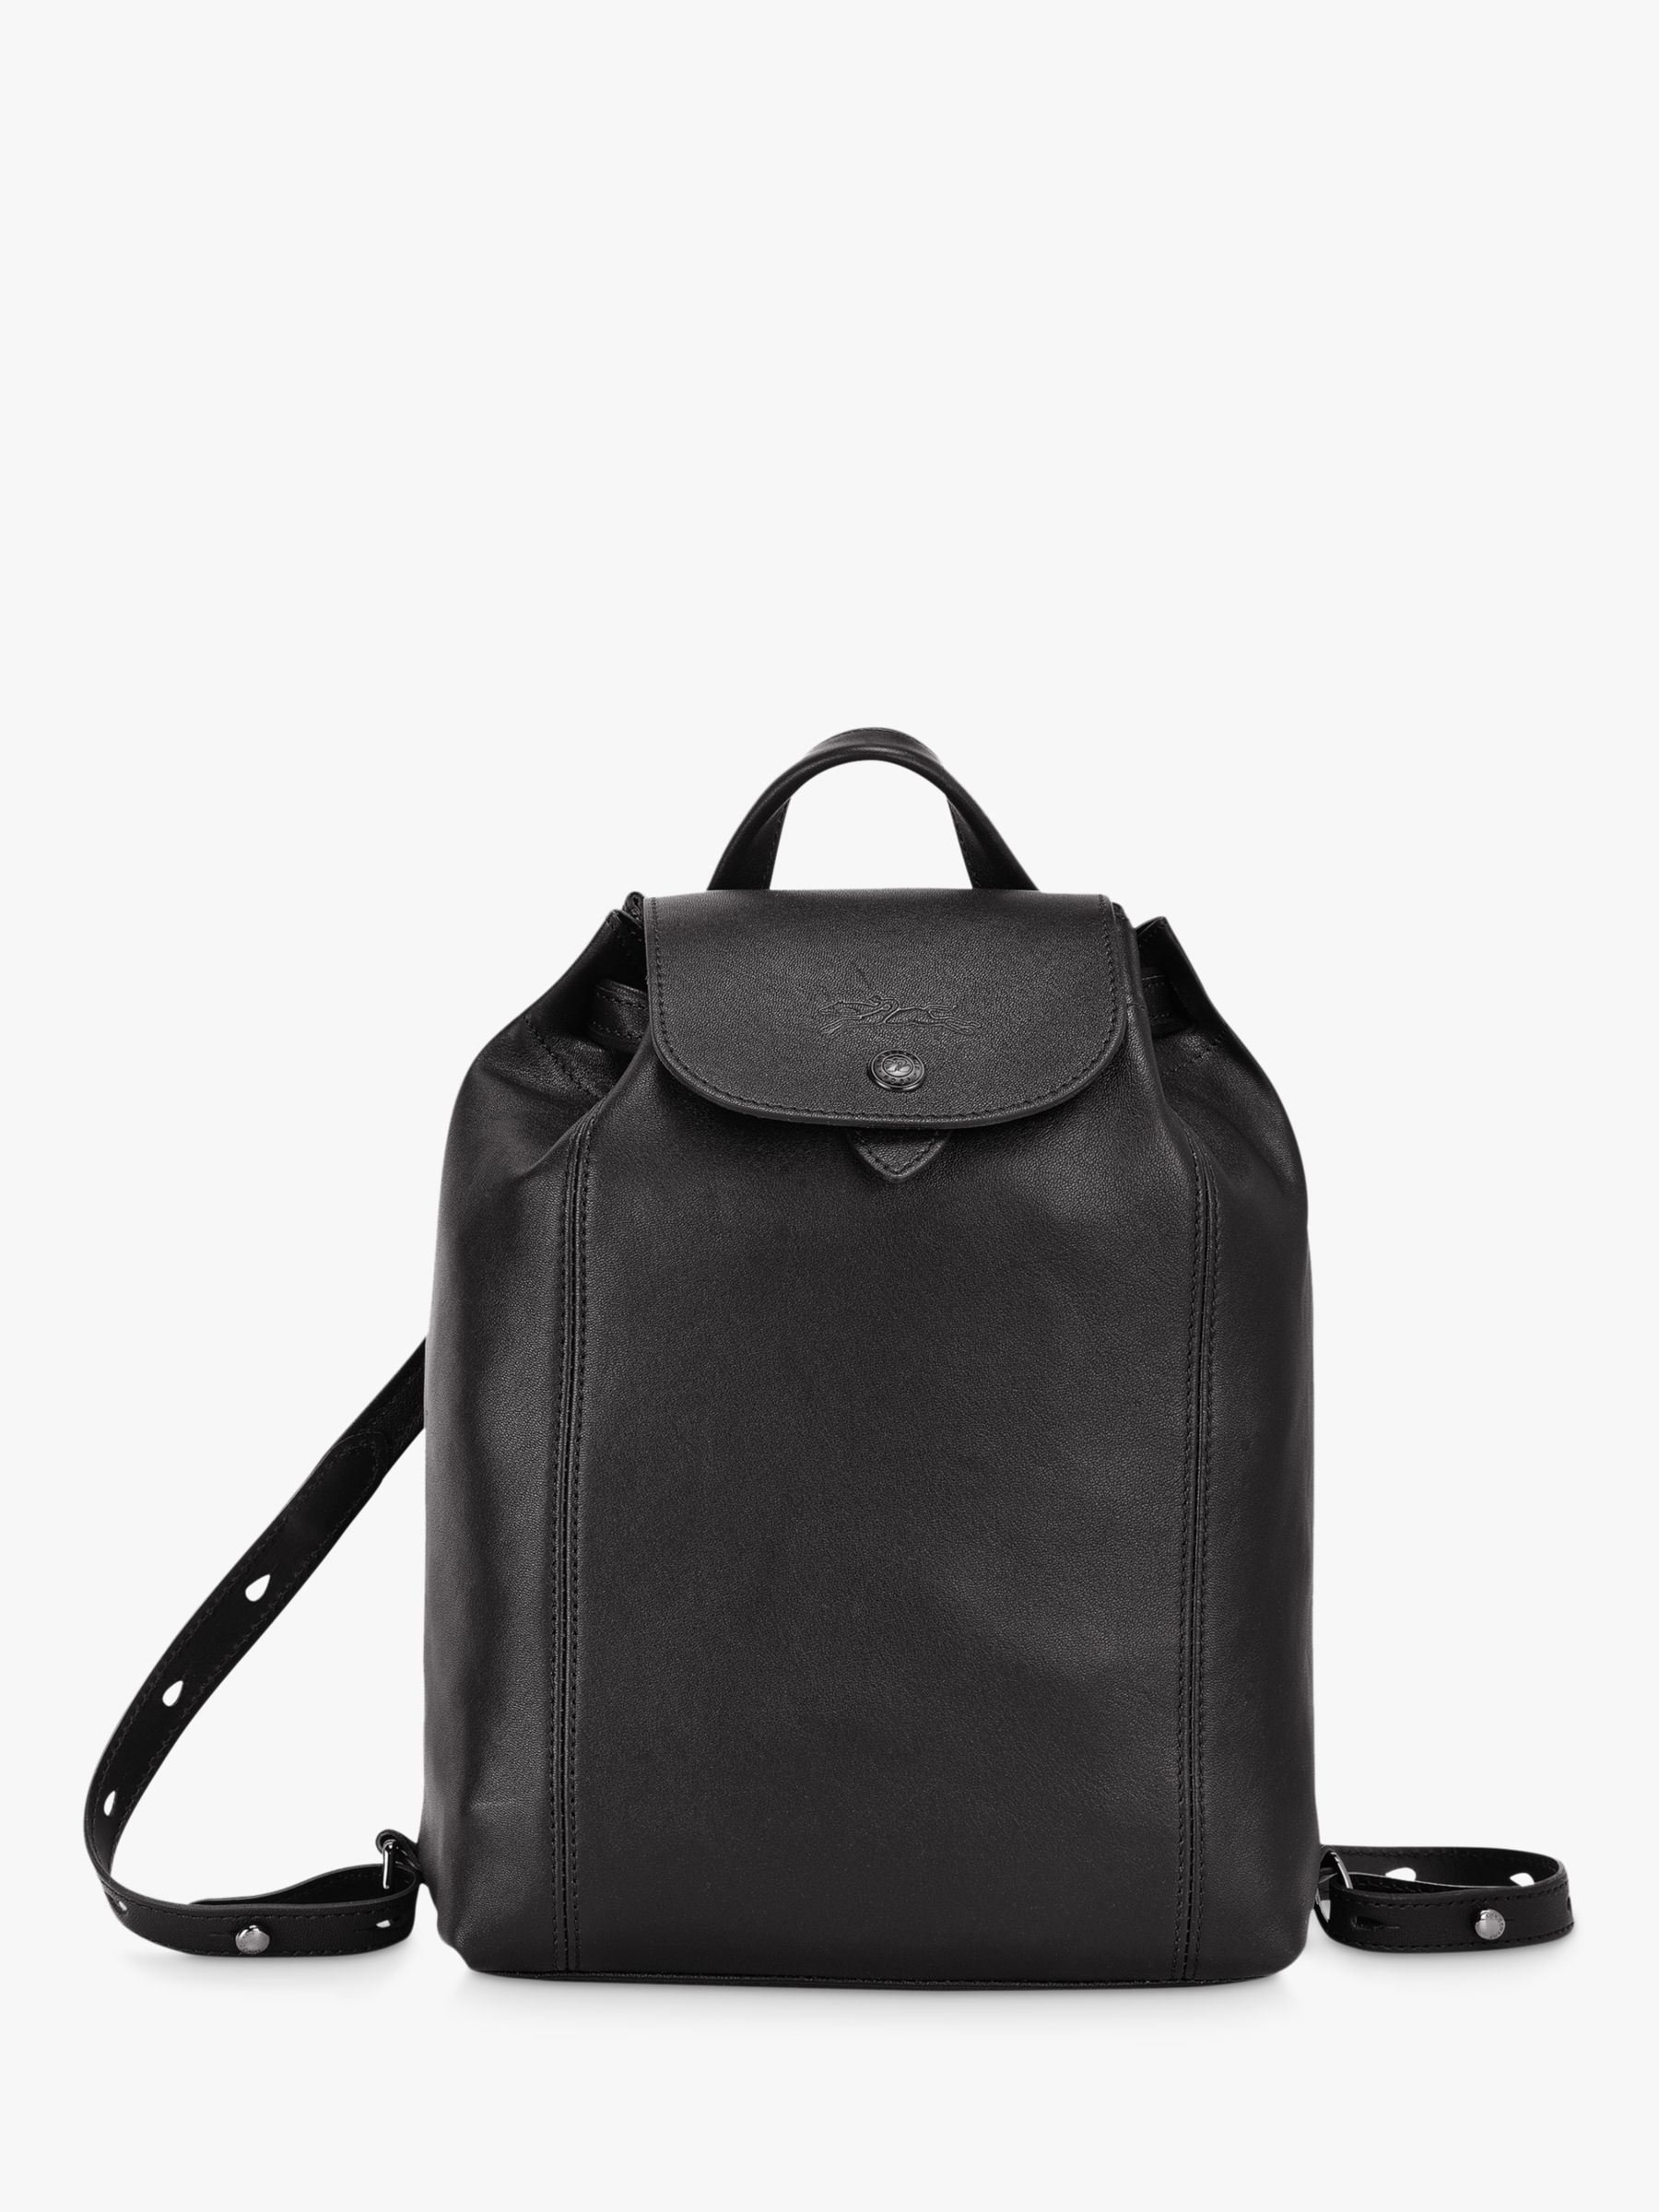 black leather longchamp bag